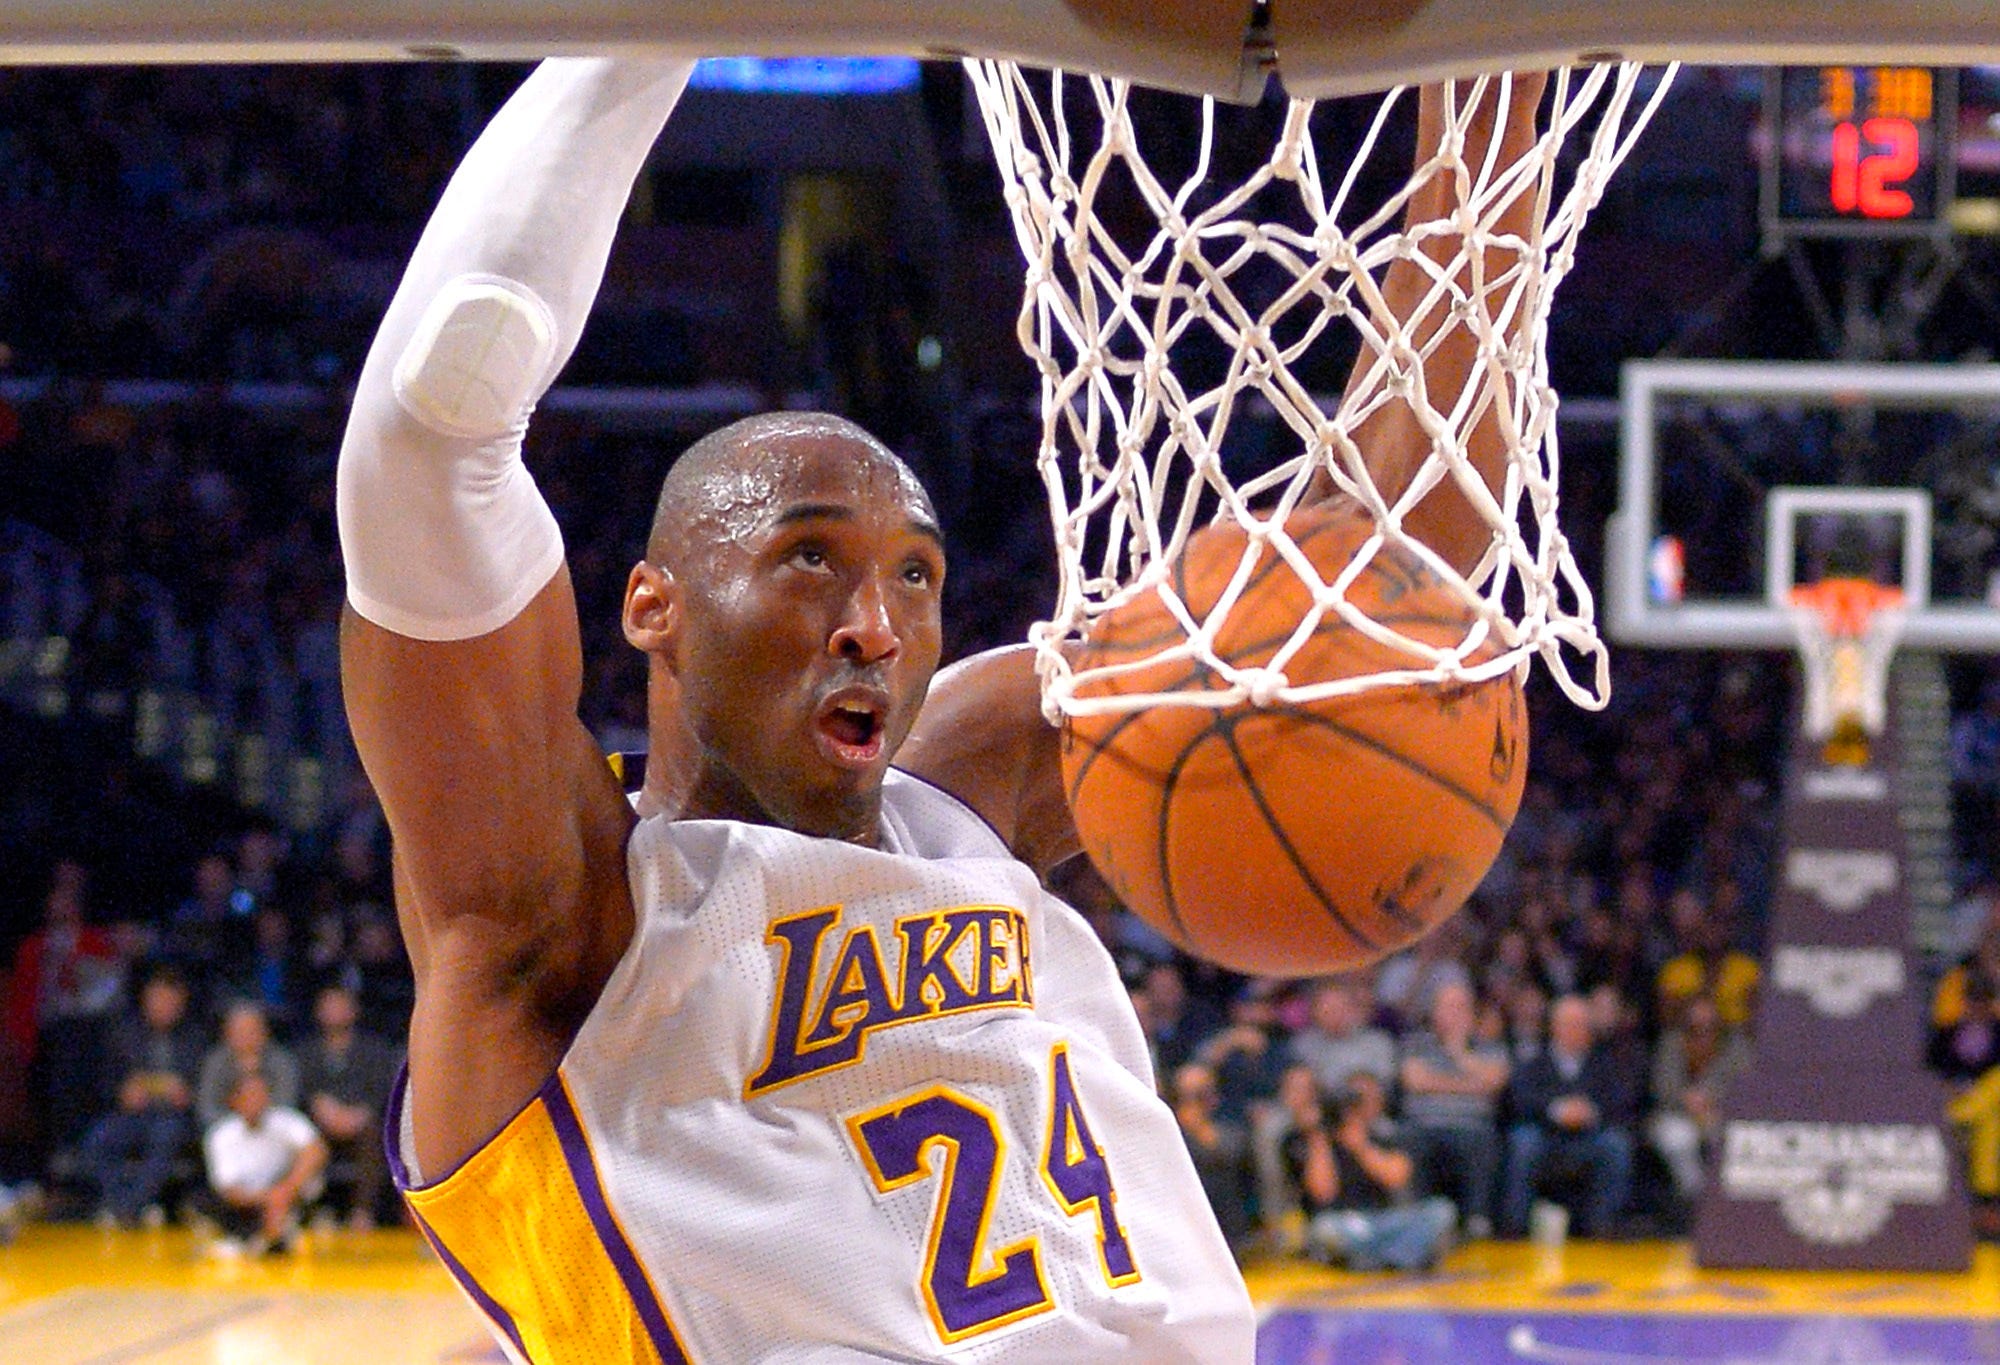 Kobe Bryant dunks a ball in a January 2015 game.